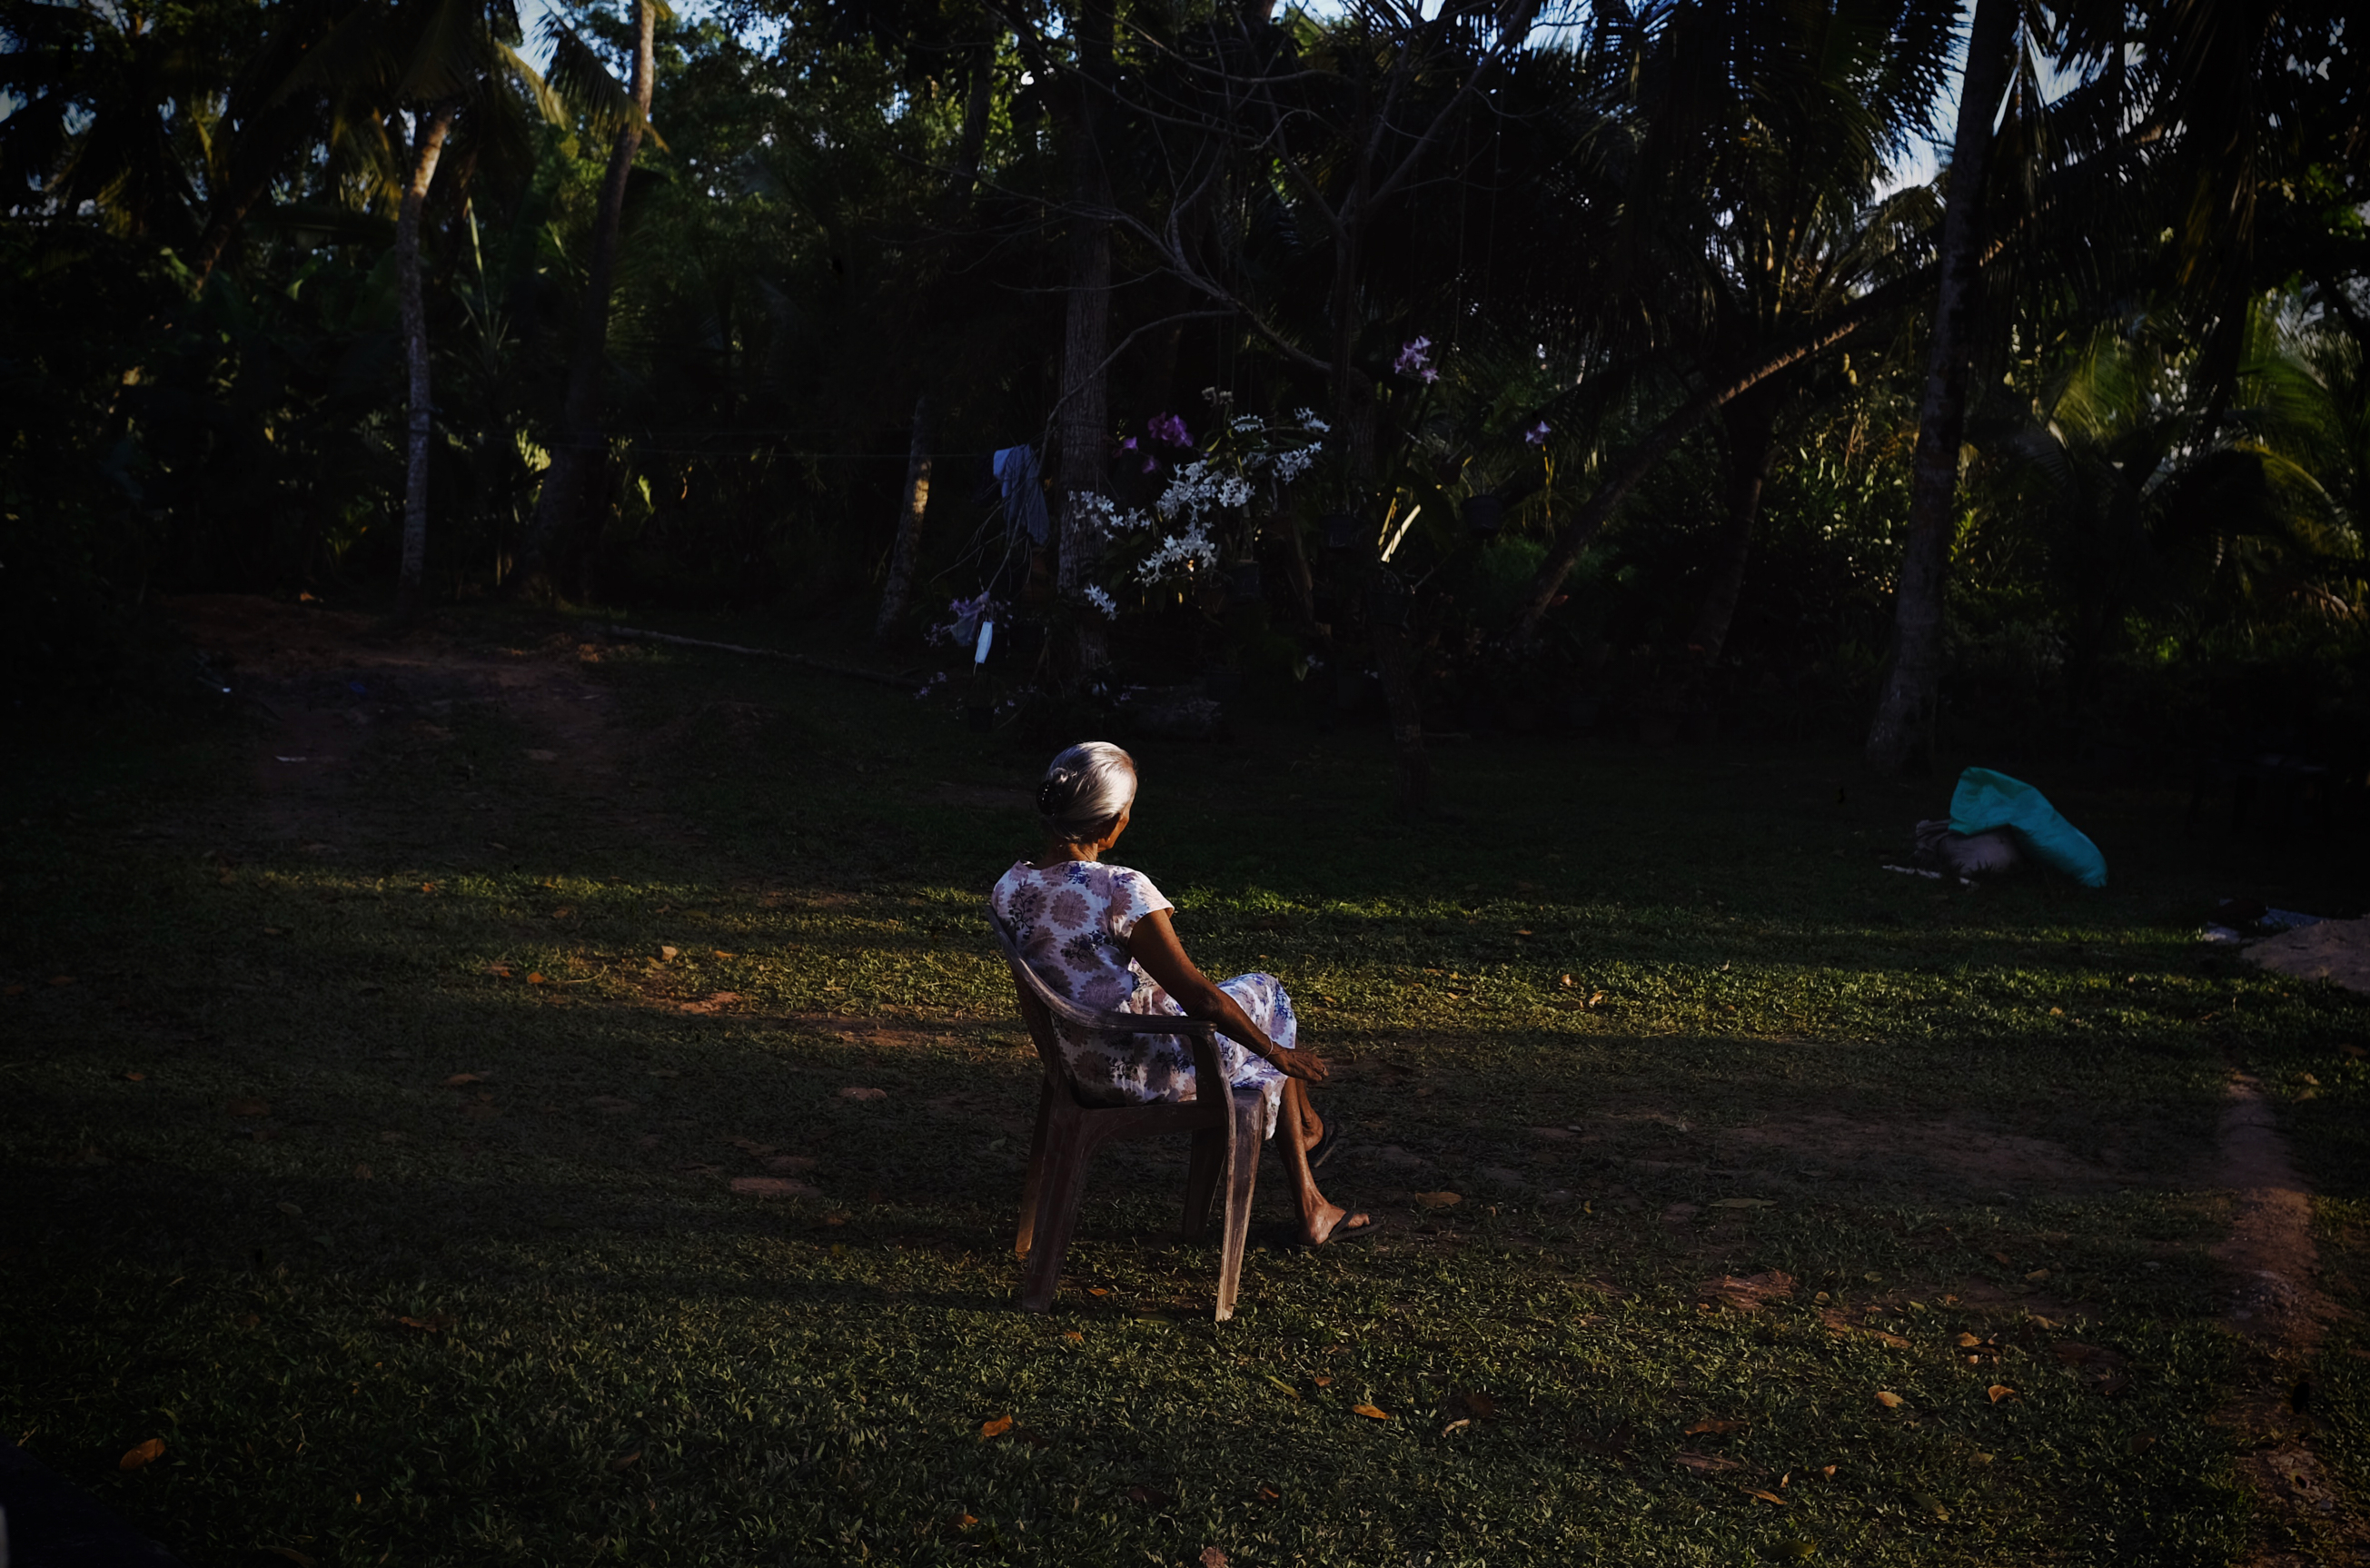 Sri Lanka, Weligama, 2021-10-24. An elder woman sitting on a chair in her garden by the end of the day. Photograph by Noemie de Bellaigue / Hans Lucas. 
Sri Lanka, Weligama, 2021-10-24. Une femme agee assise sur une chaise dans son jardin en fin de journee. Photographie par Noemie de Bellaigue / Hans Lucas.